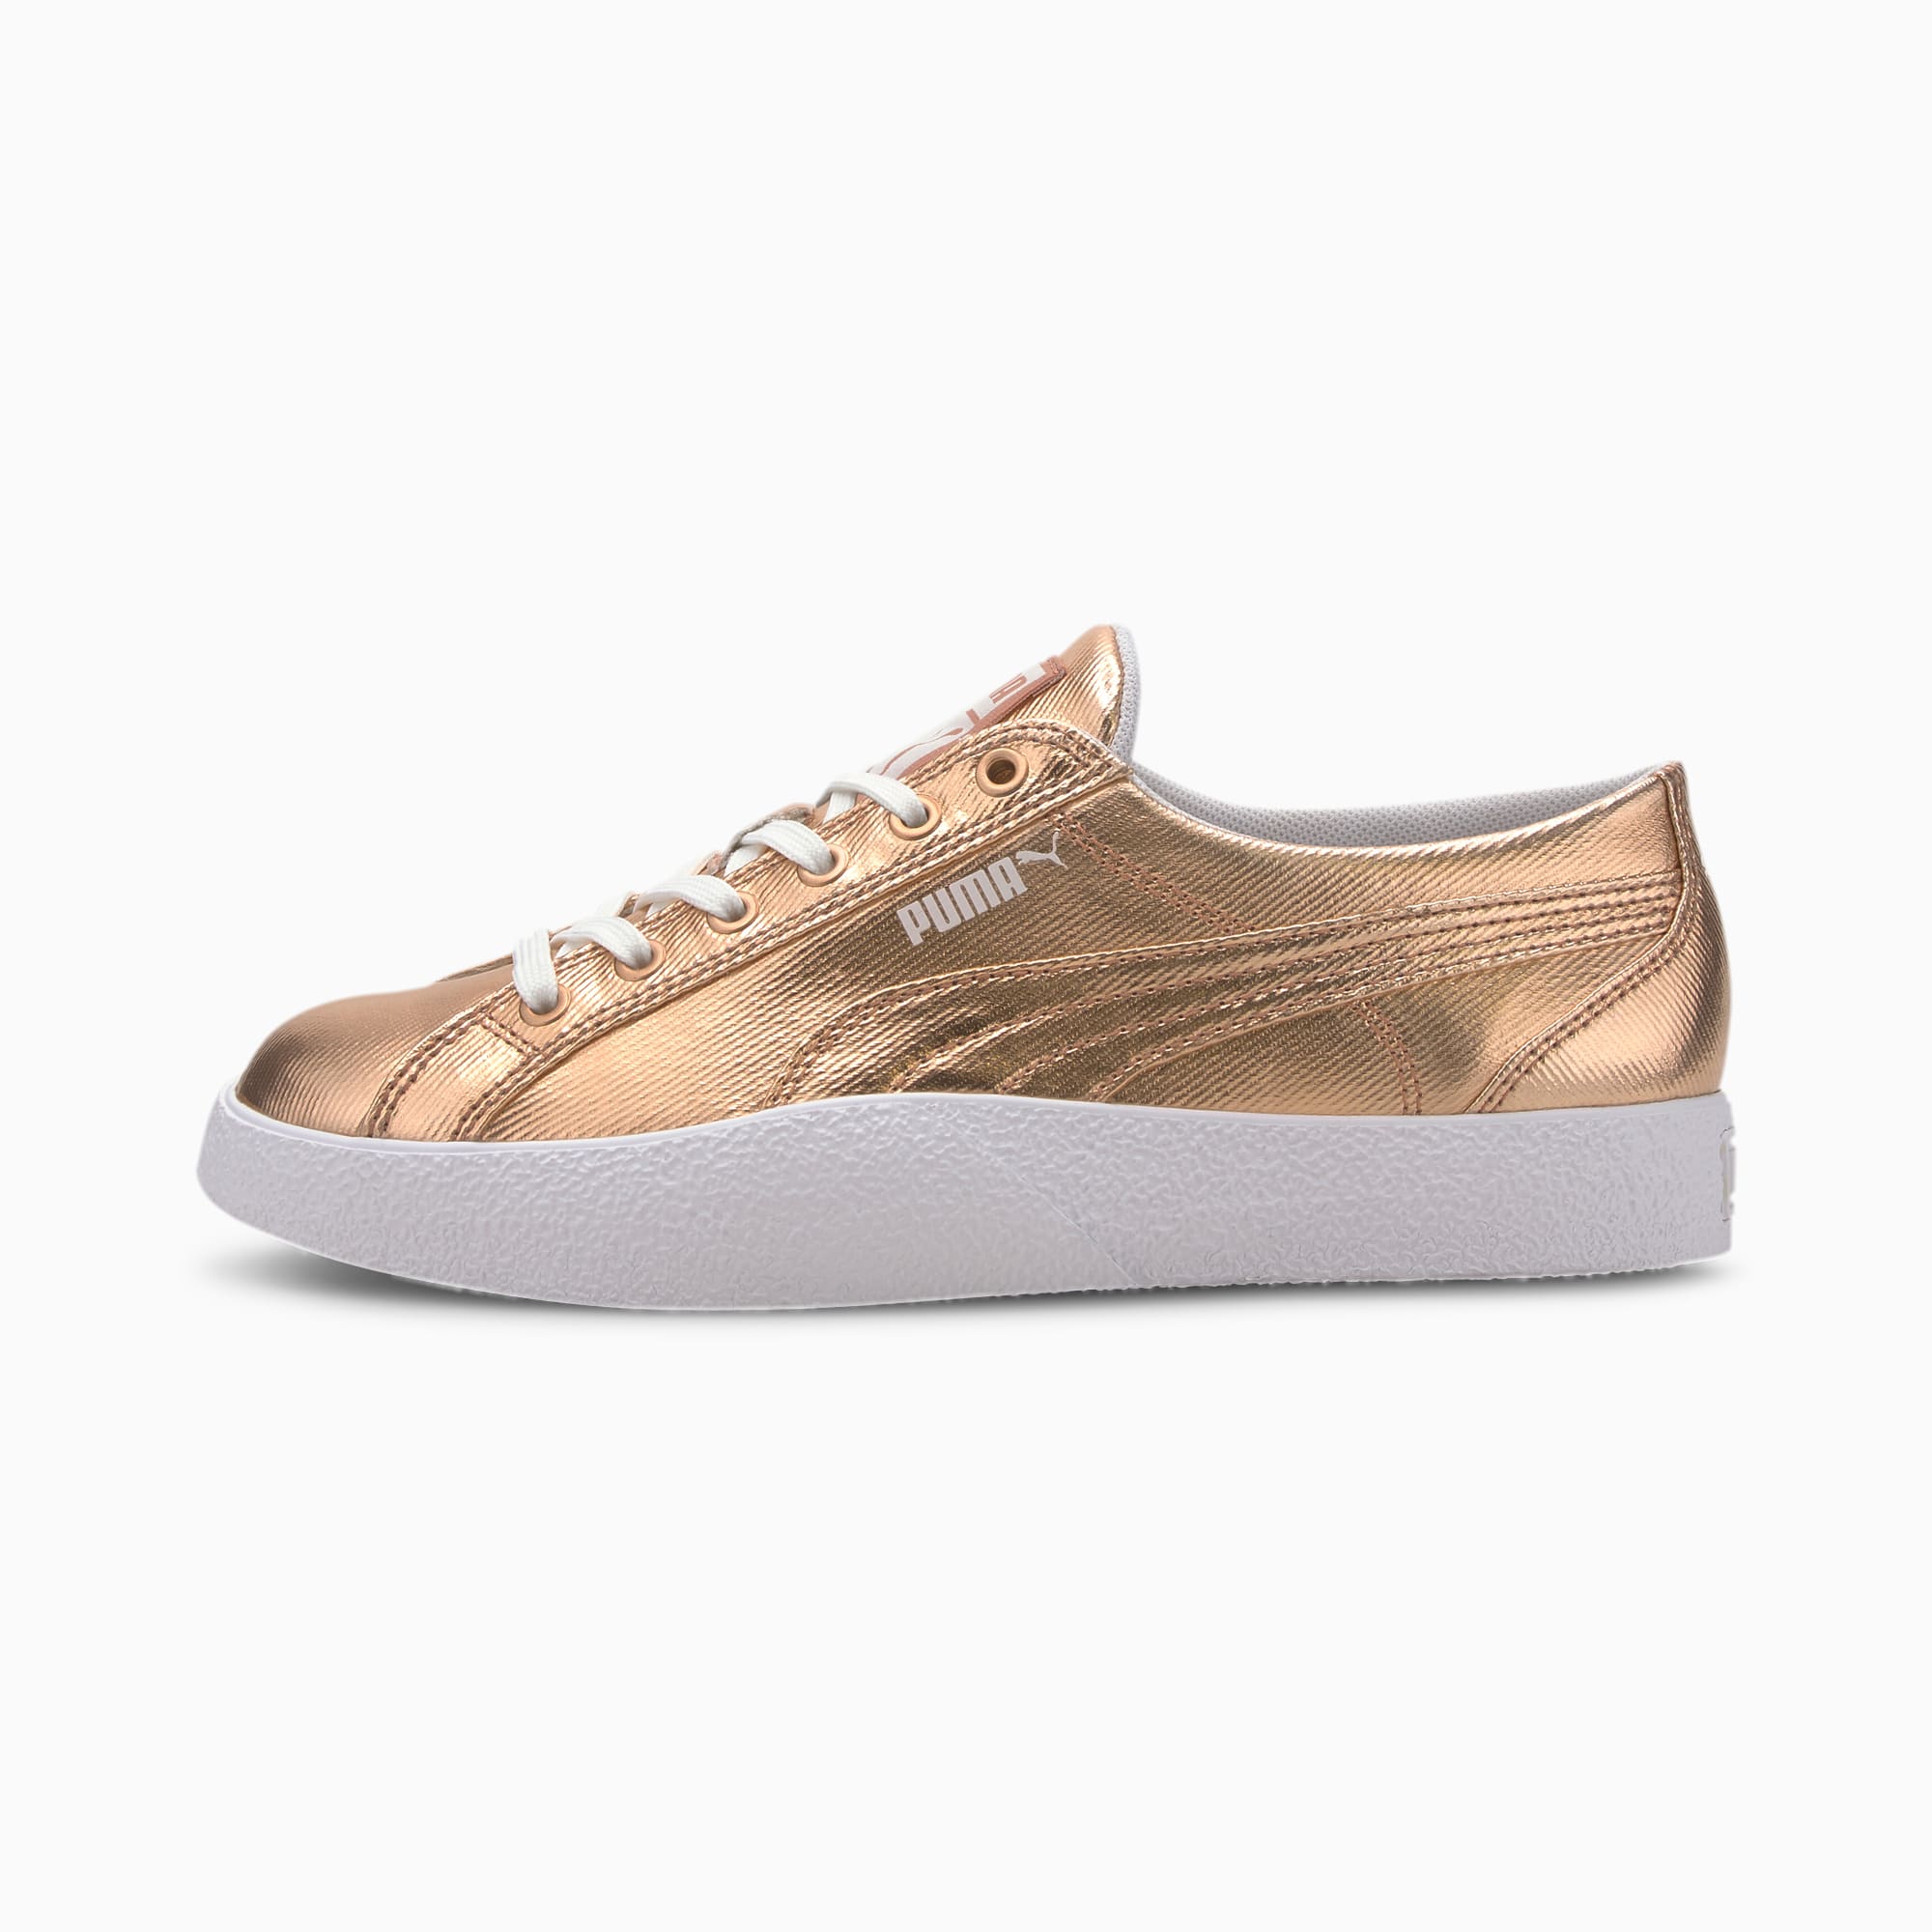 puma rose gold metallic shoes